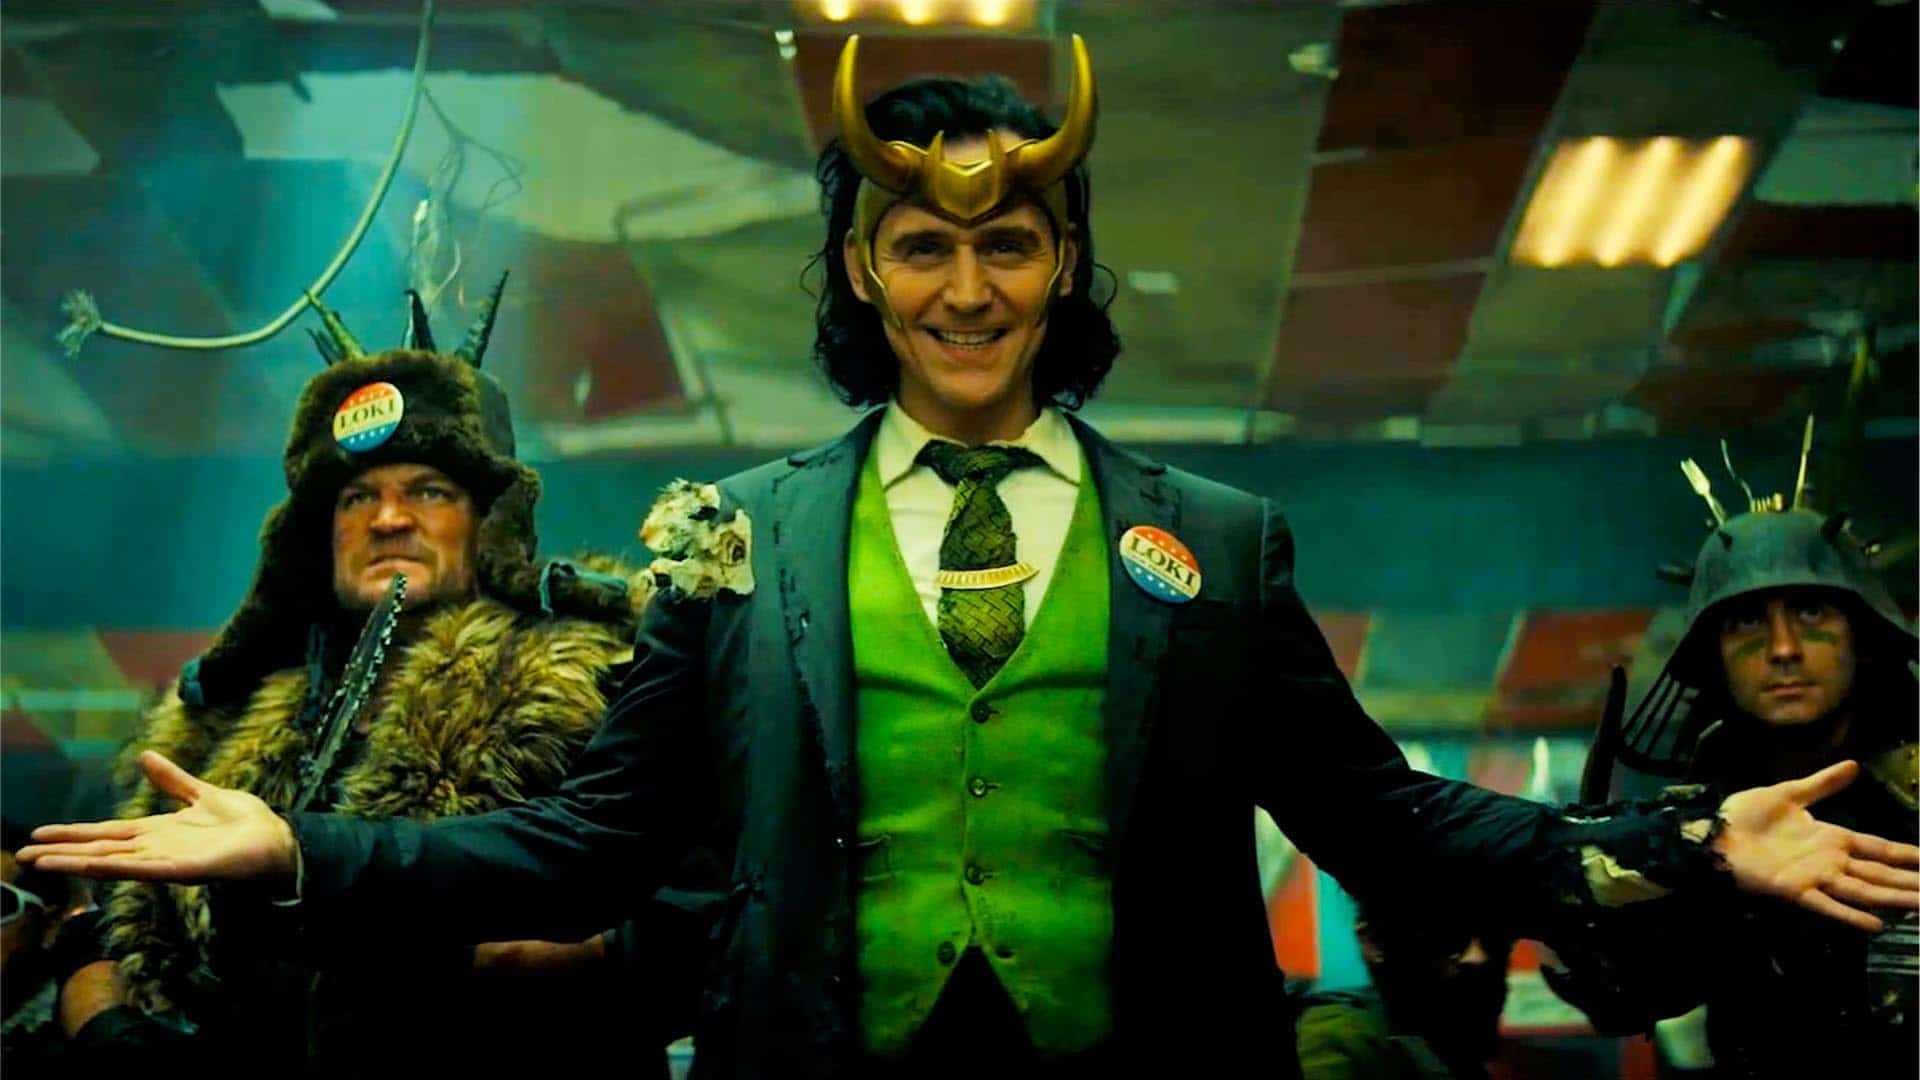 Marvel Studios' Loki Trailer: The God of Mischief's Time Has Come